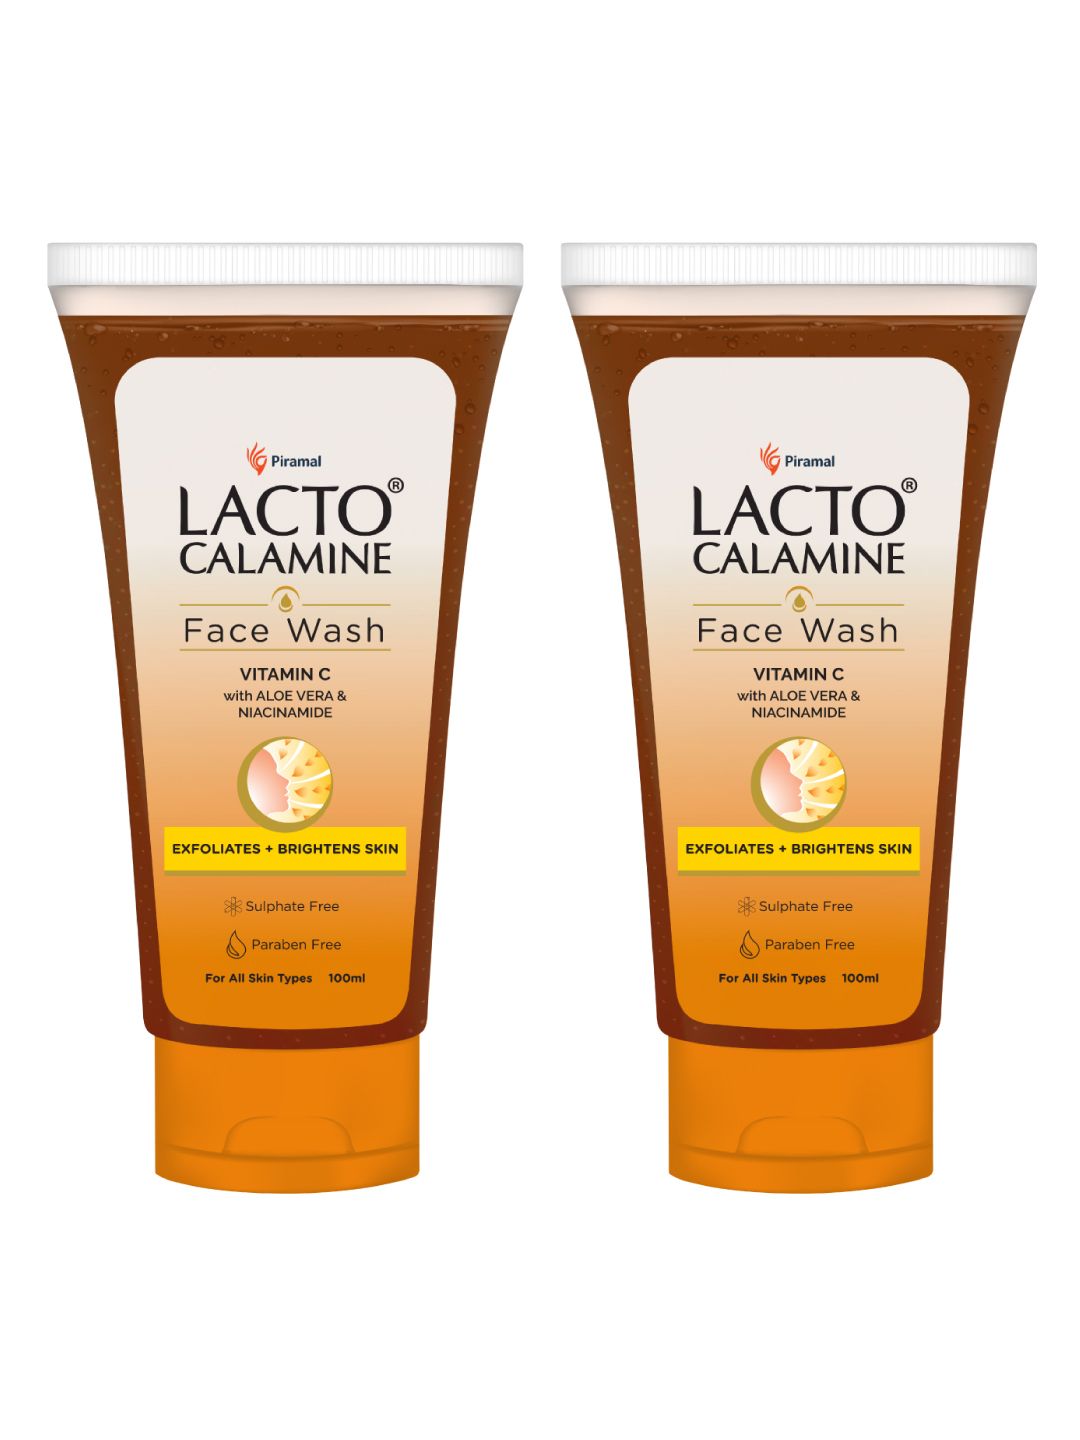 Lacto Calamine Set Of 2 Vitamin C Face Wash With Aloe Vera & Niacinamide - 100ml Each